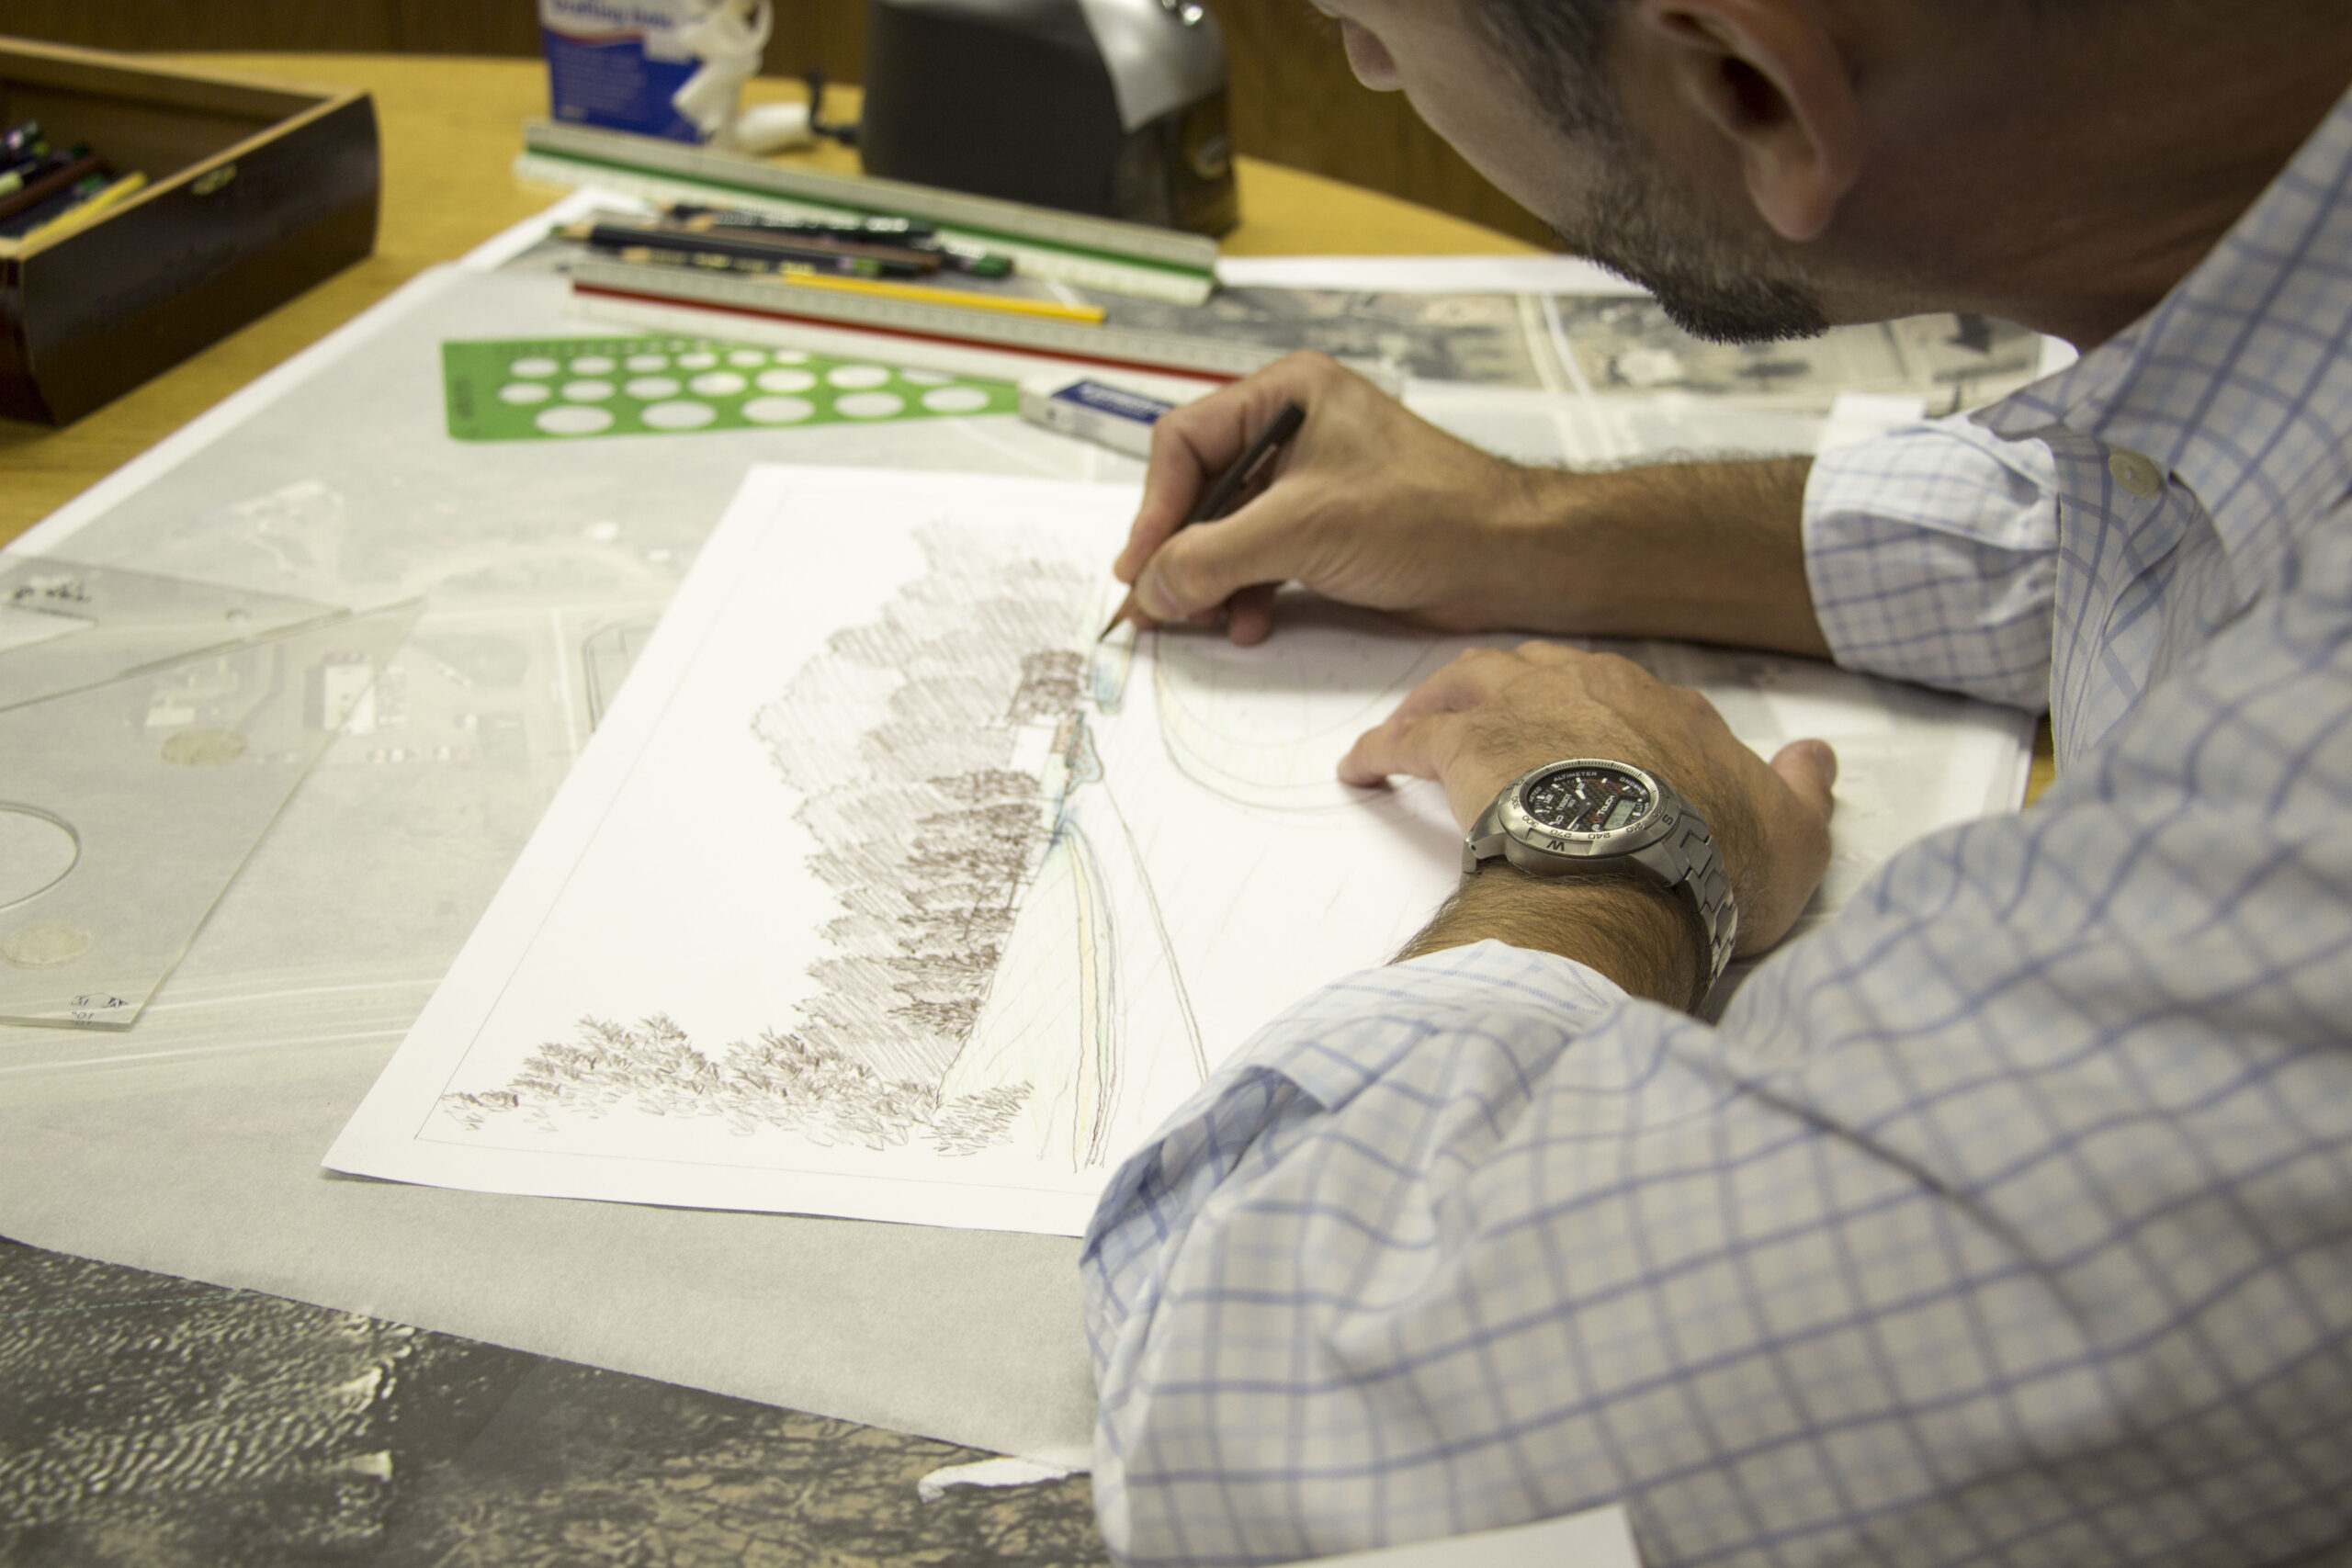 Man sketches landscape on paper